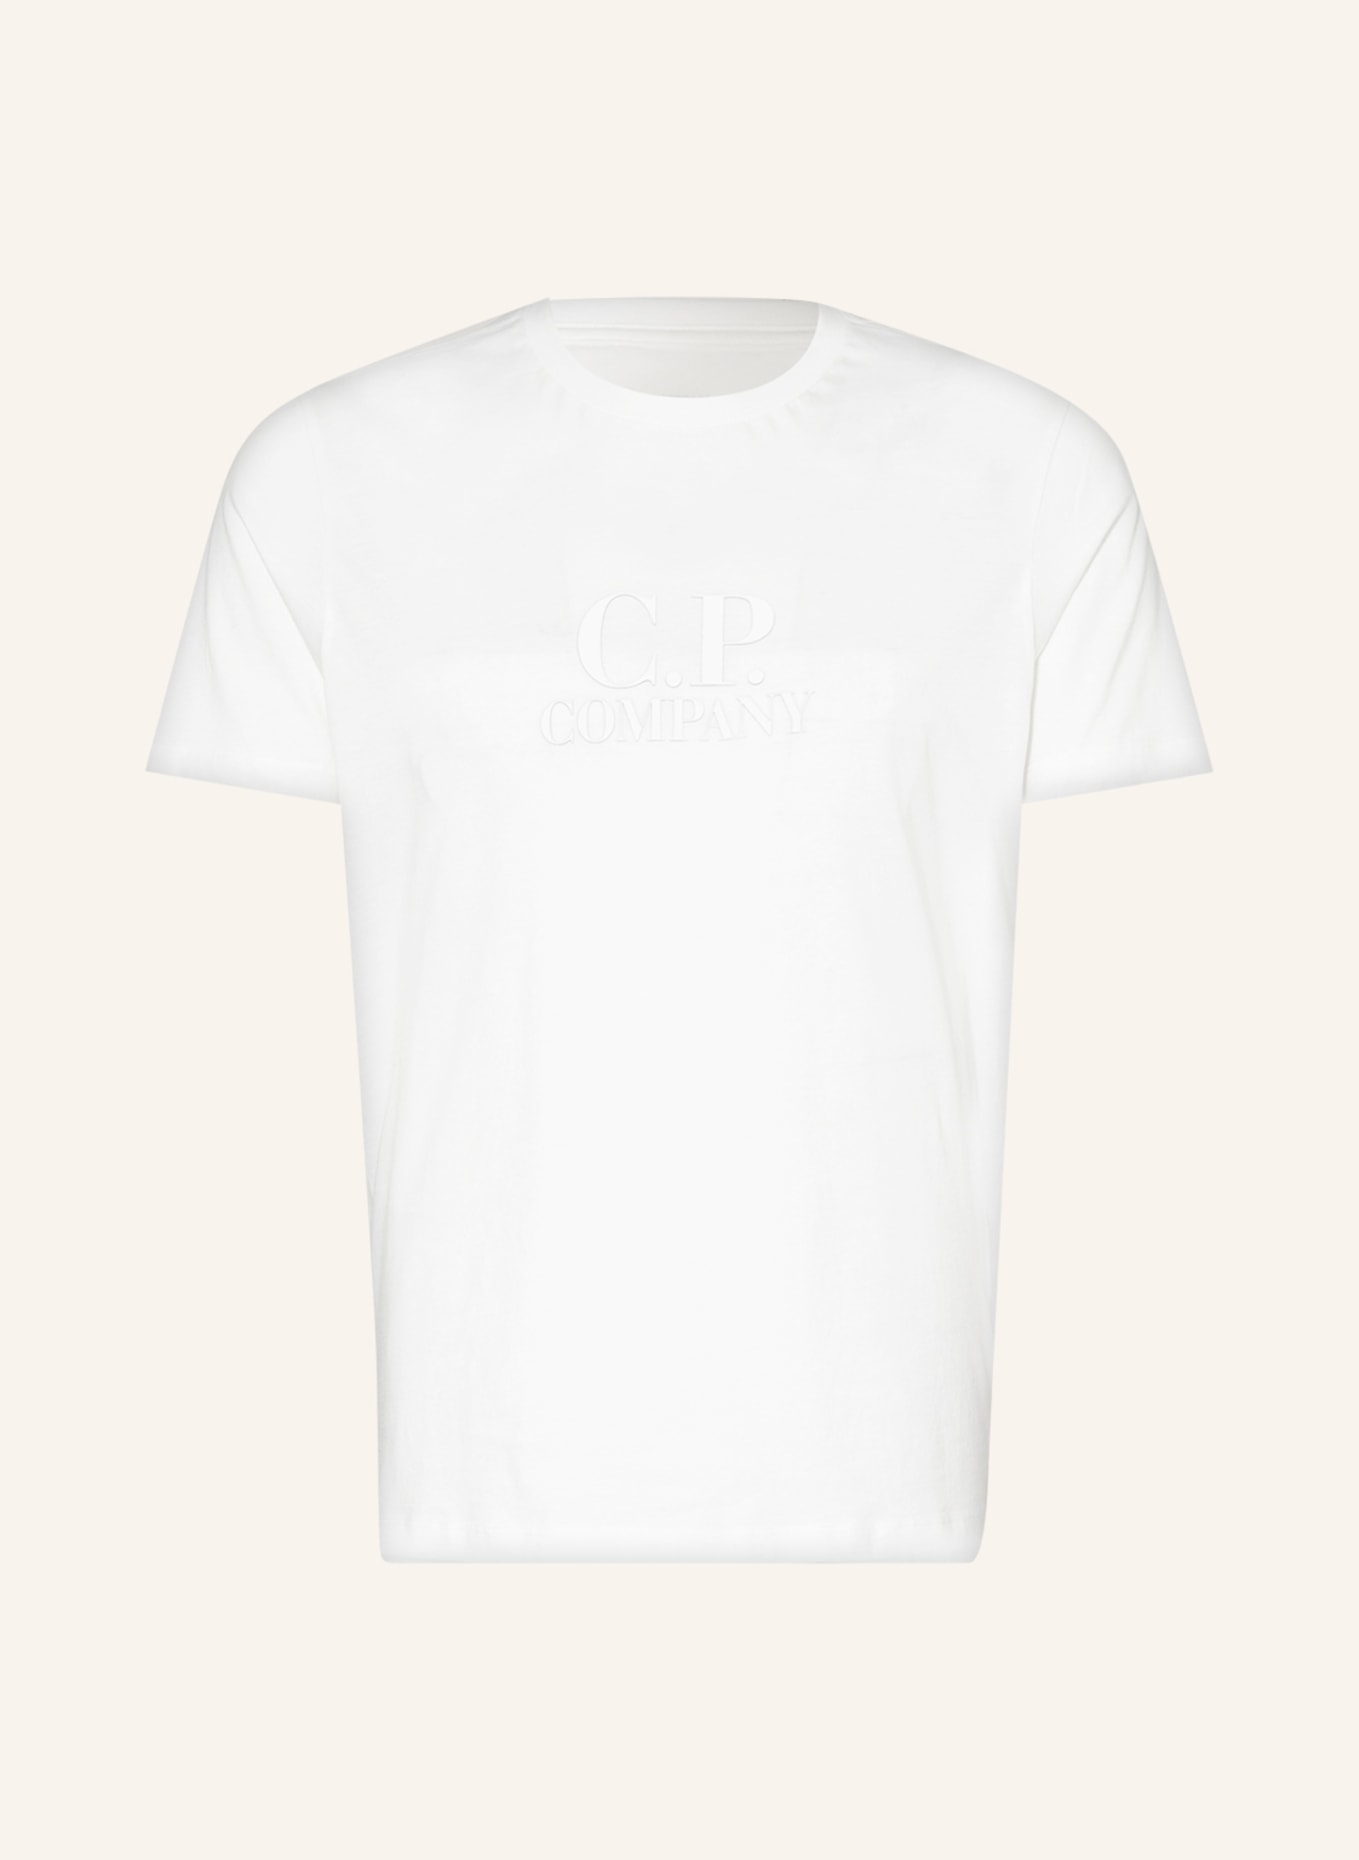 C.P. COMPANY T-Shirt, Farbe: WEISS (Bild 1)